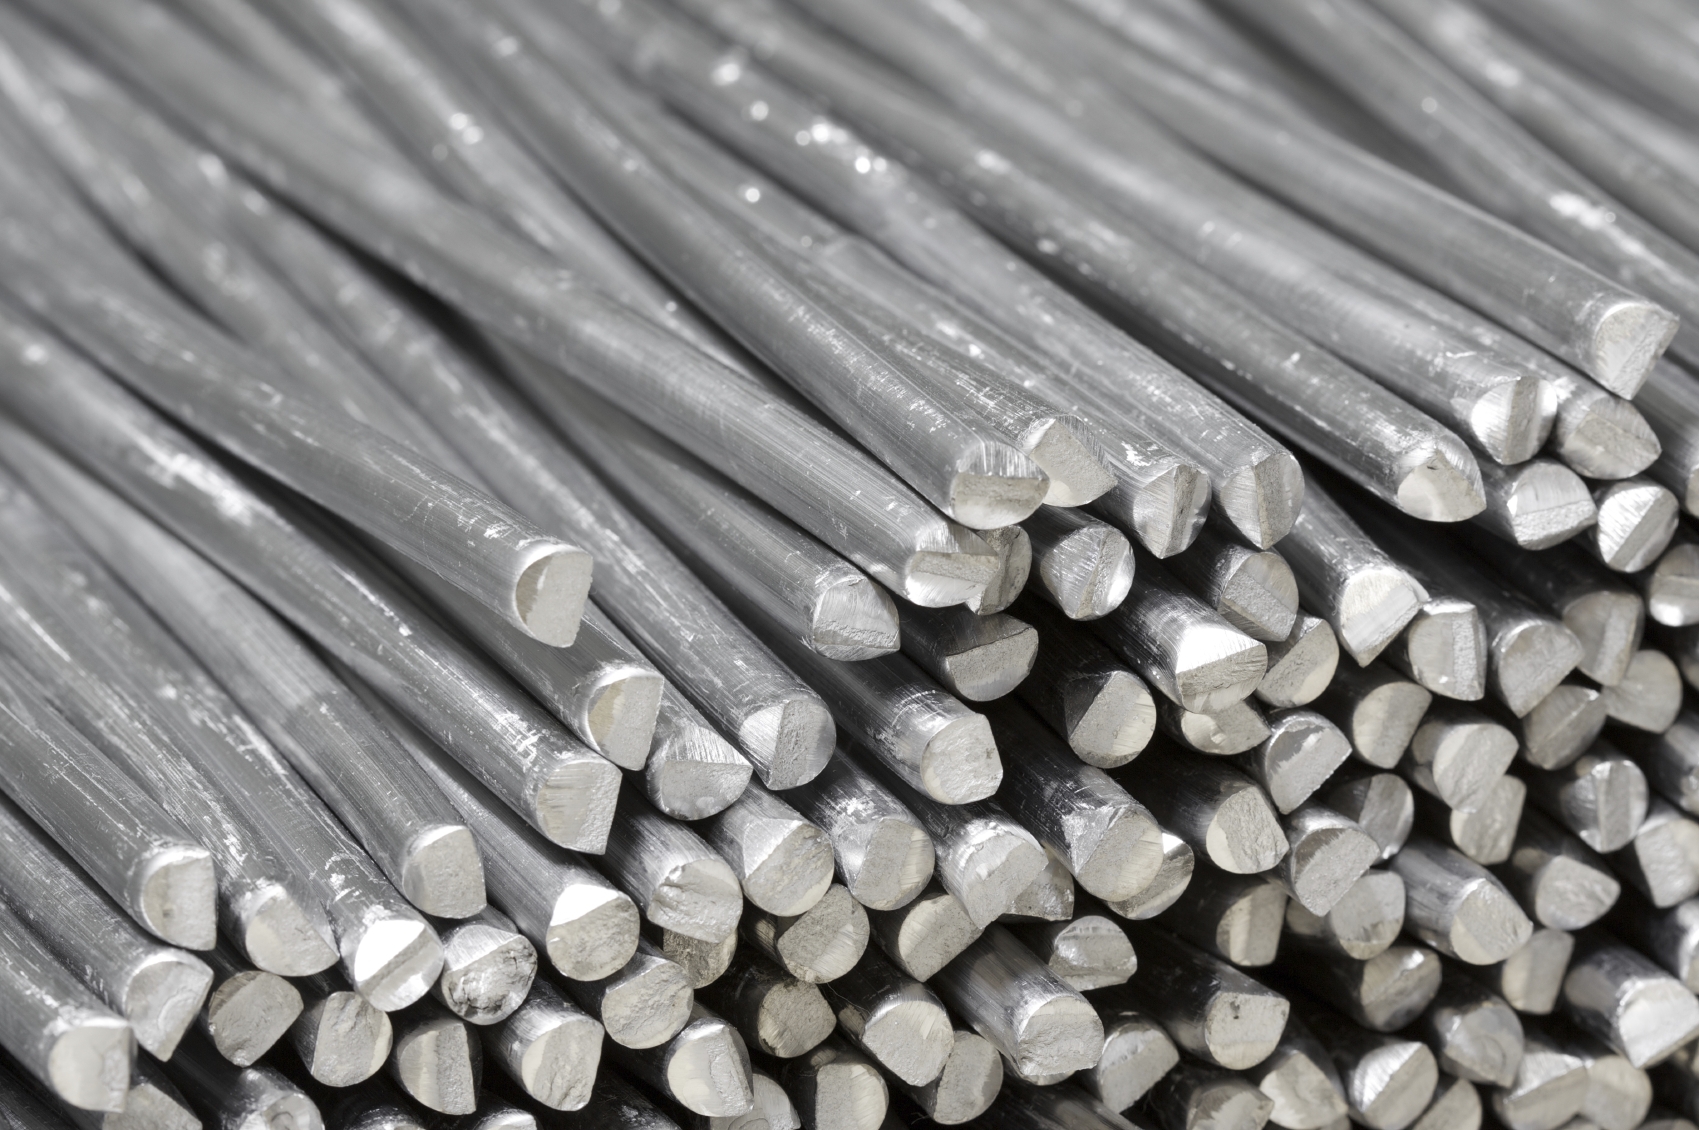  Aluminium  A Sustainable and Efficient Metal 